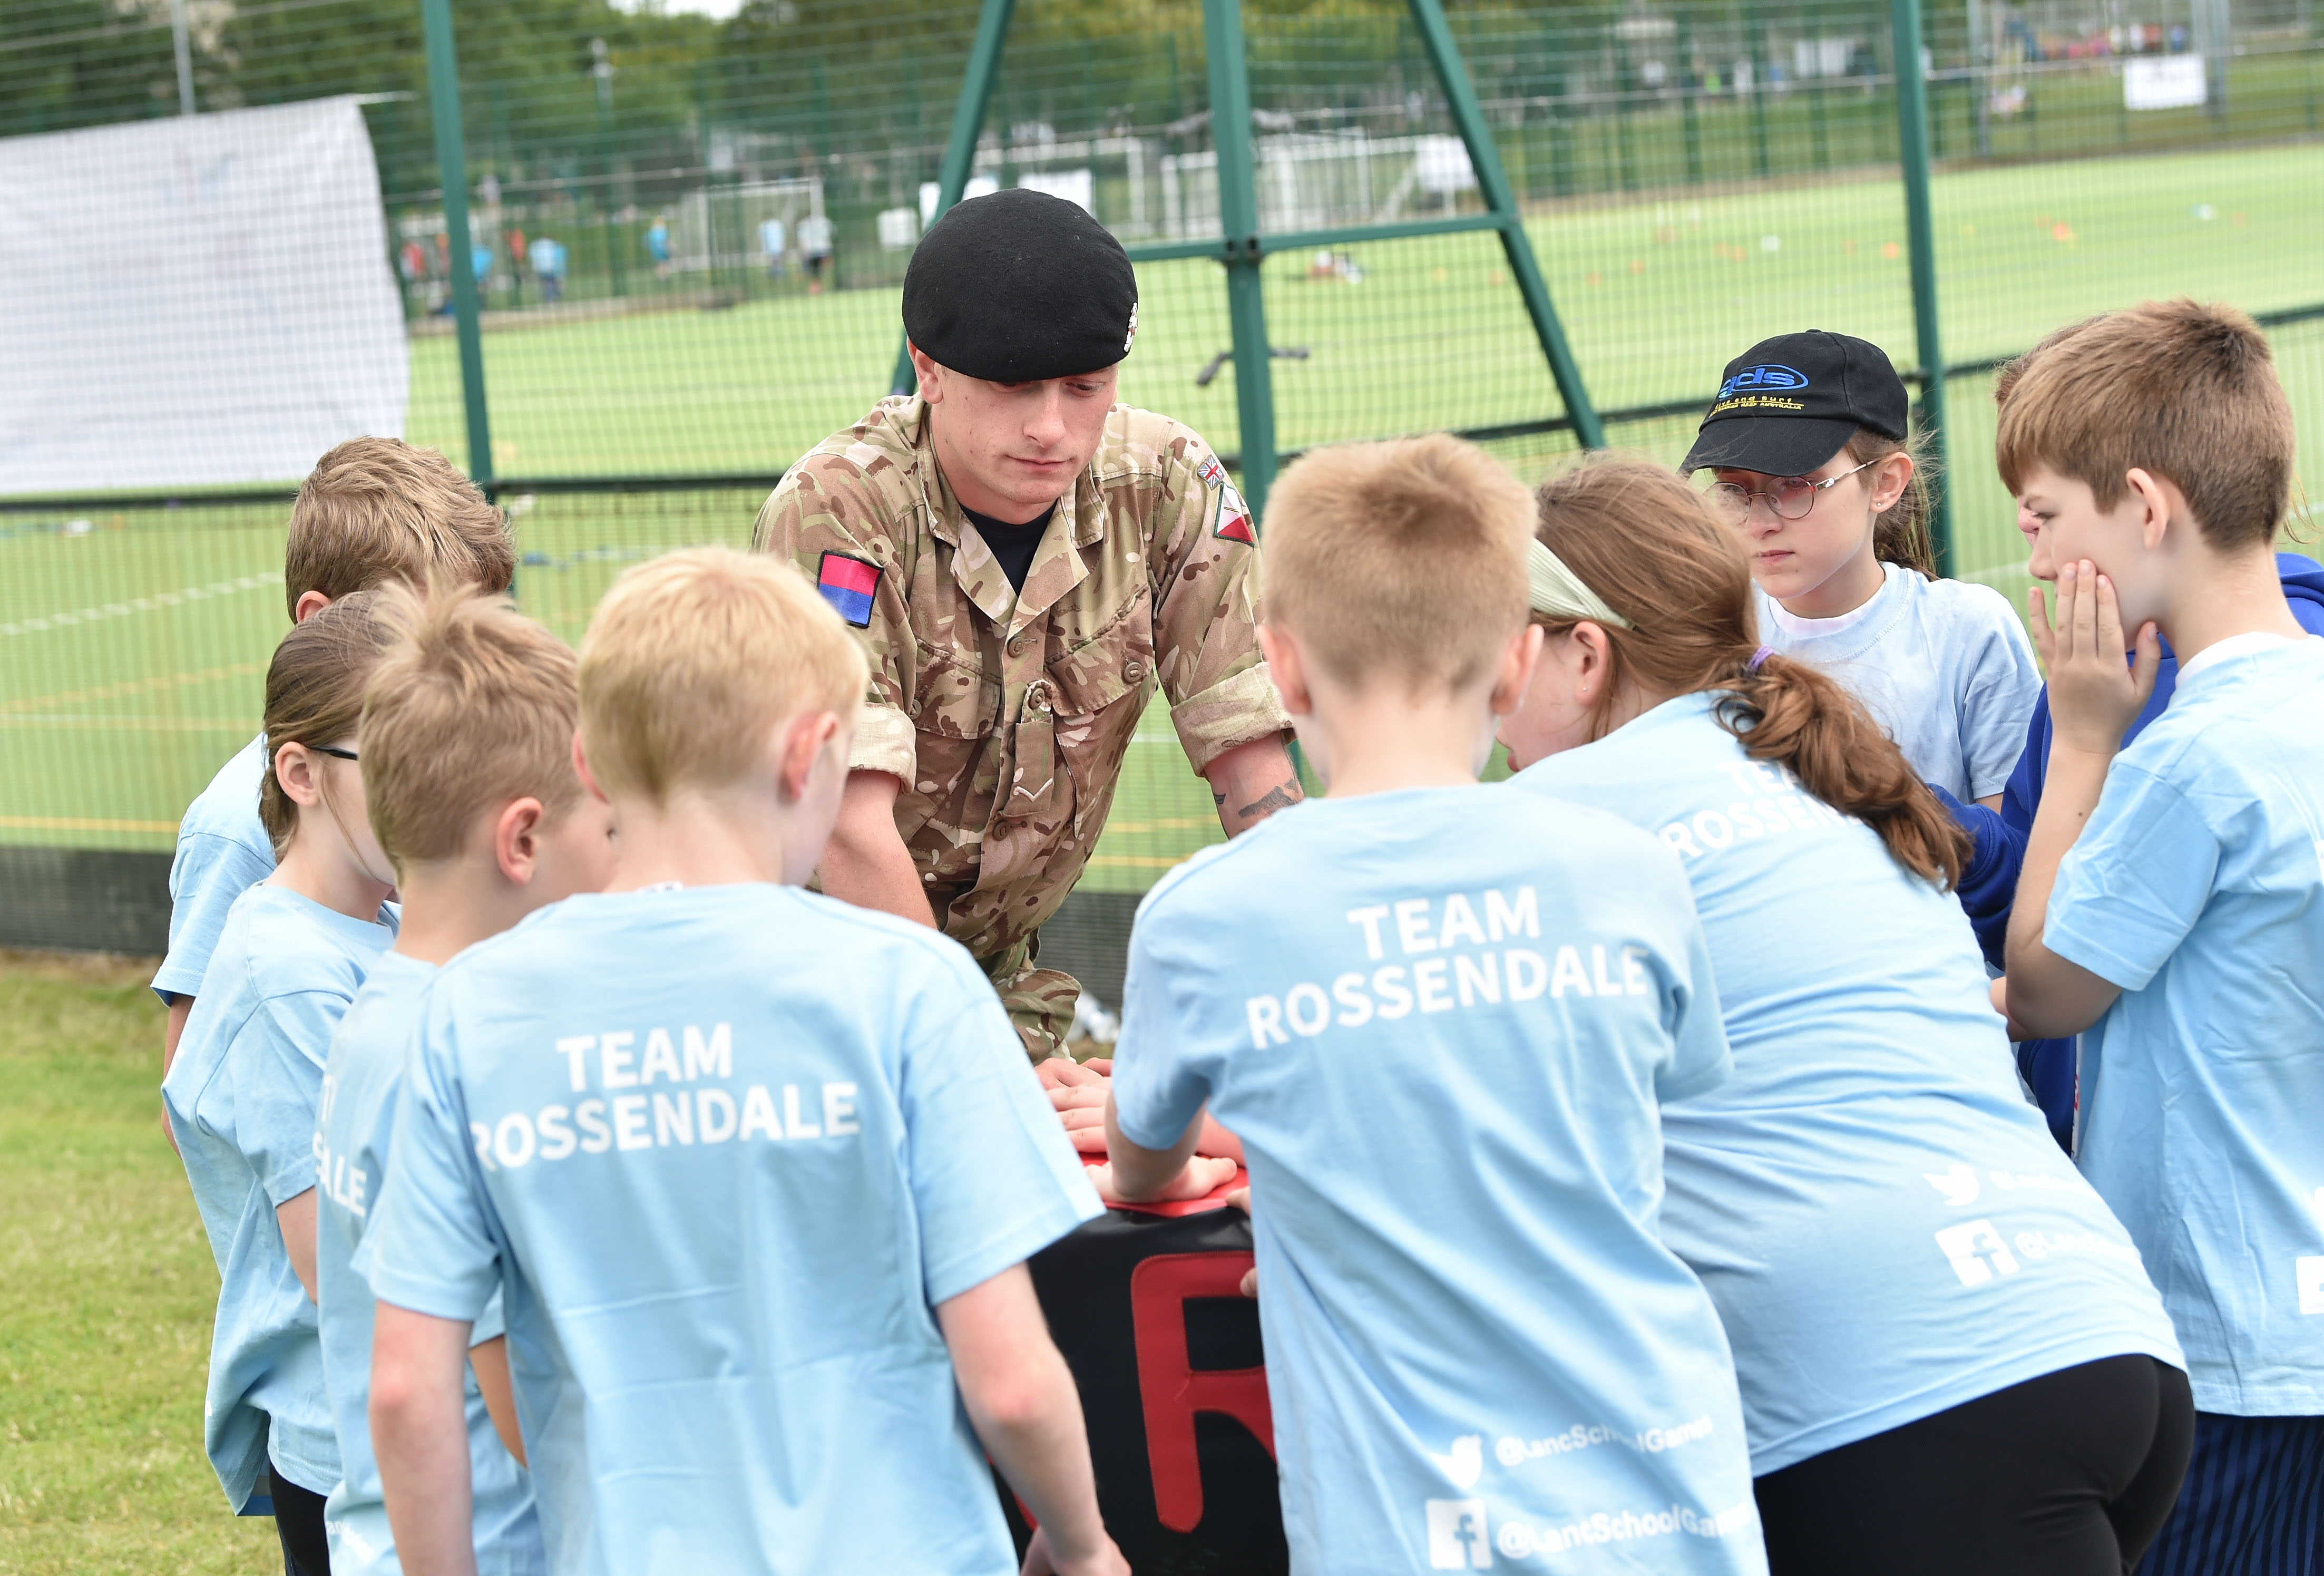 Lancashire School Games - Rossendale, Army challenge